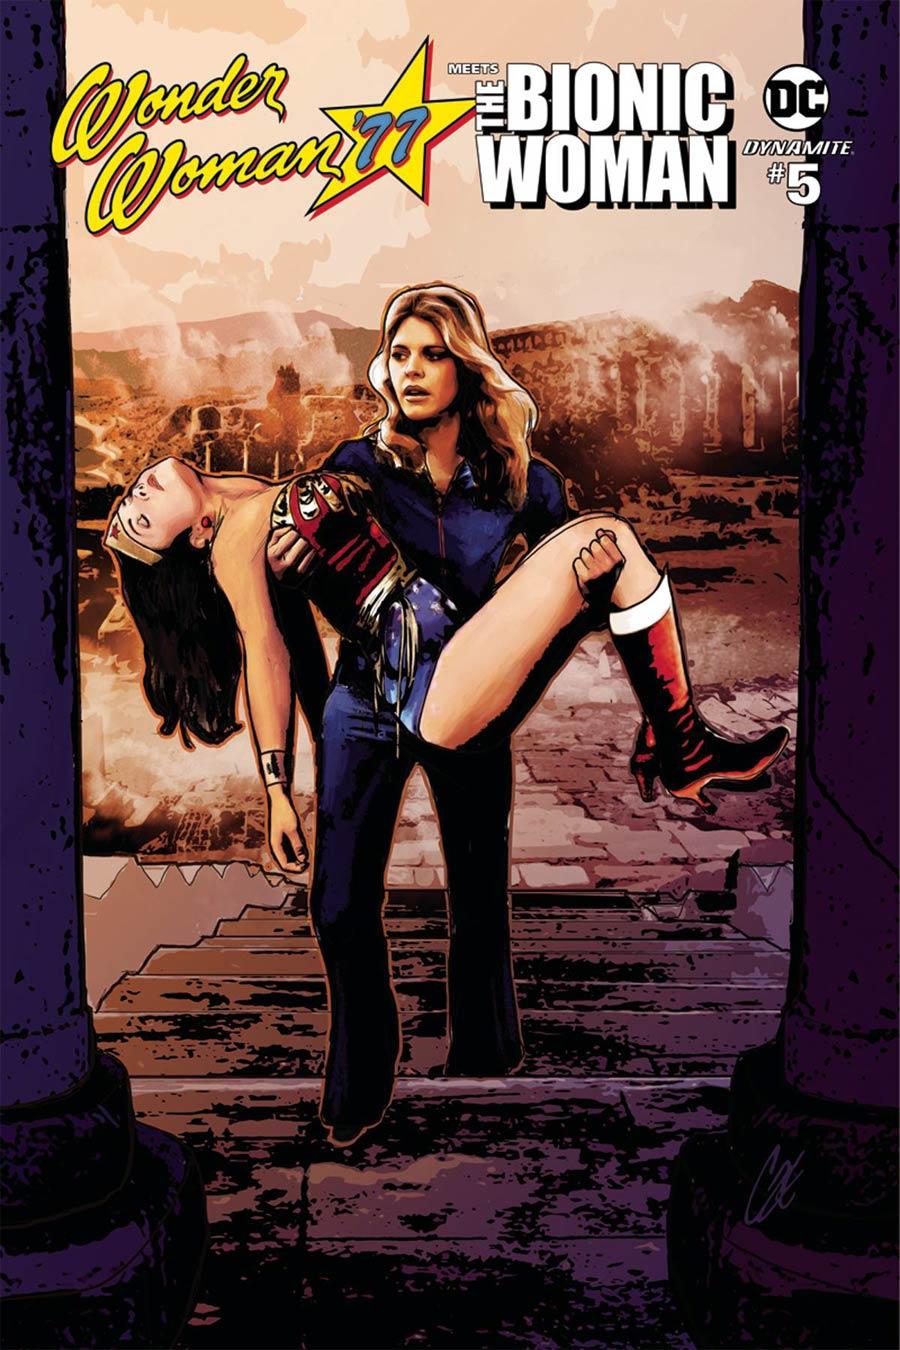 Wonder Woman 77 Meets The Bionic Woman Vol. 1 #5